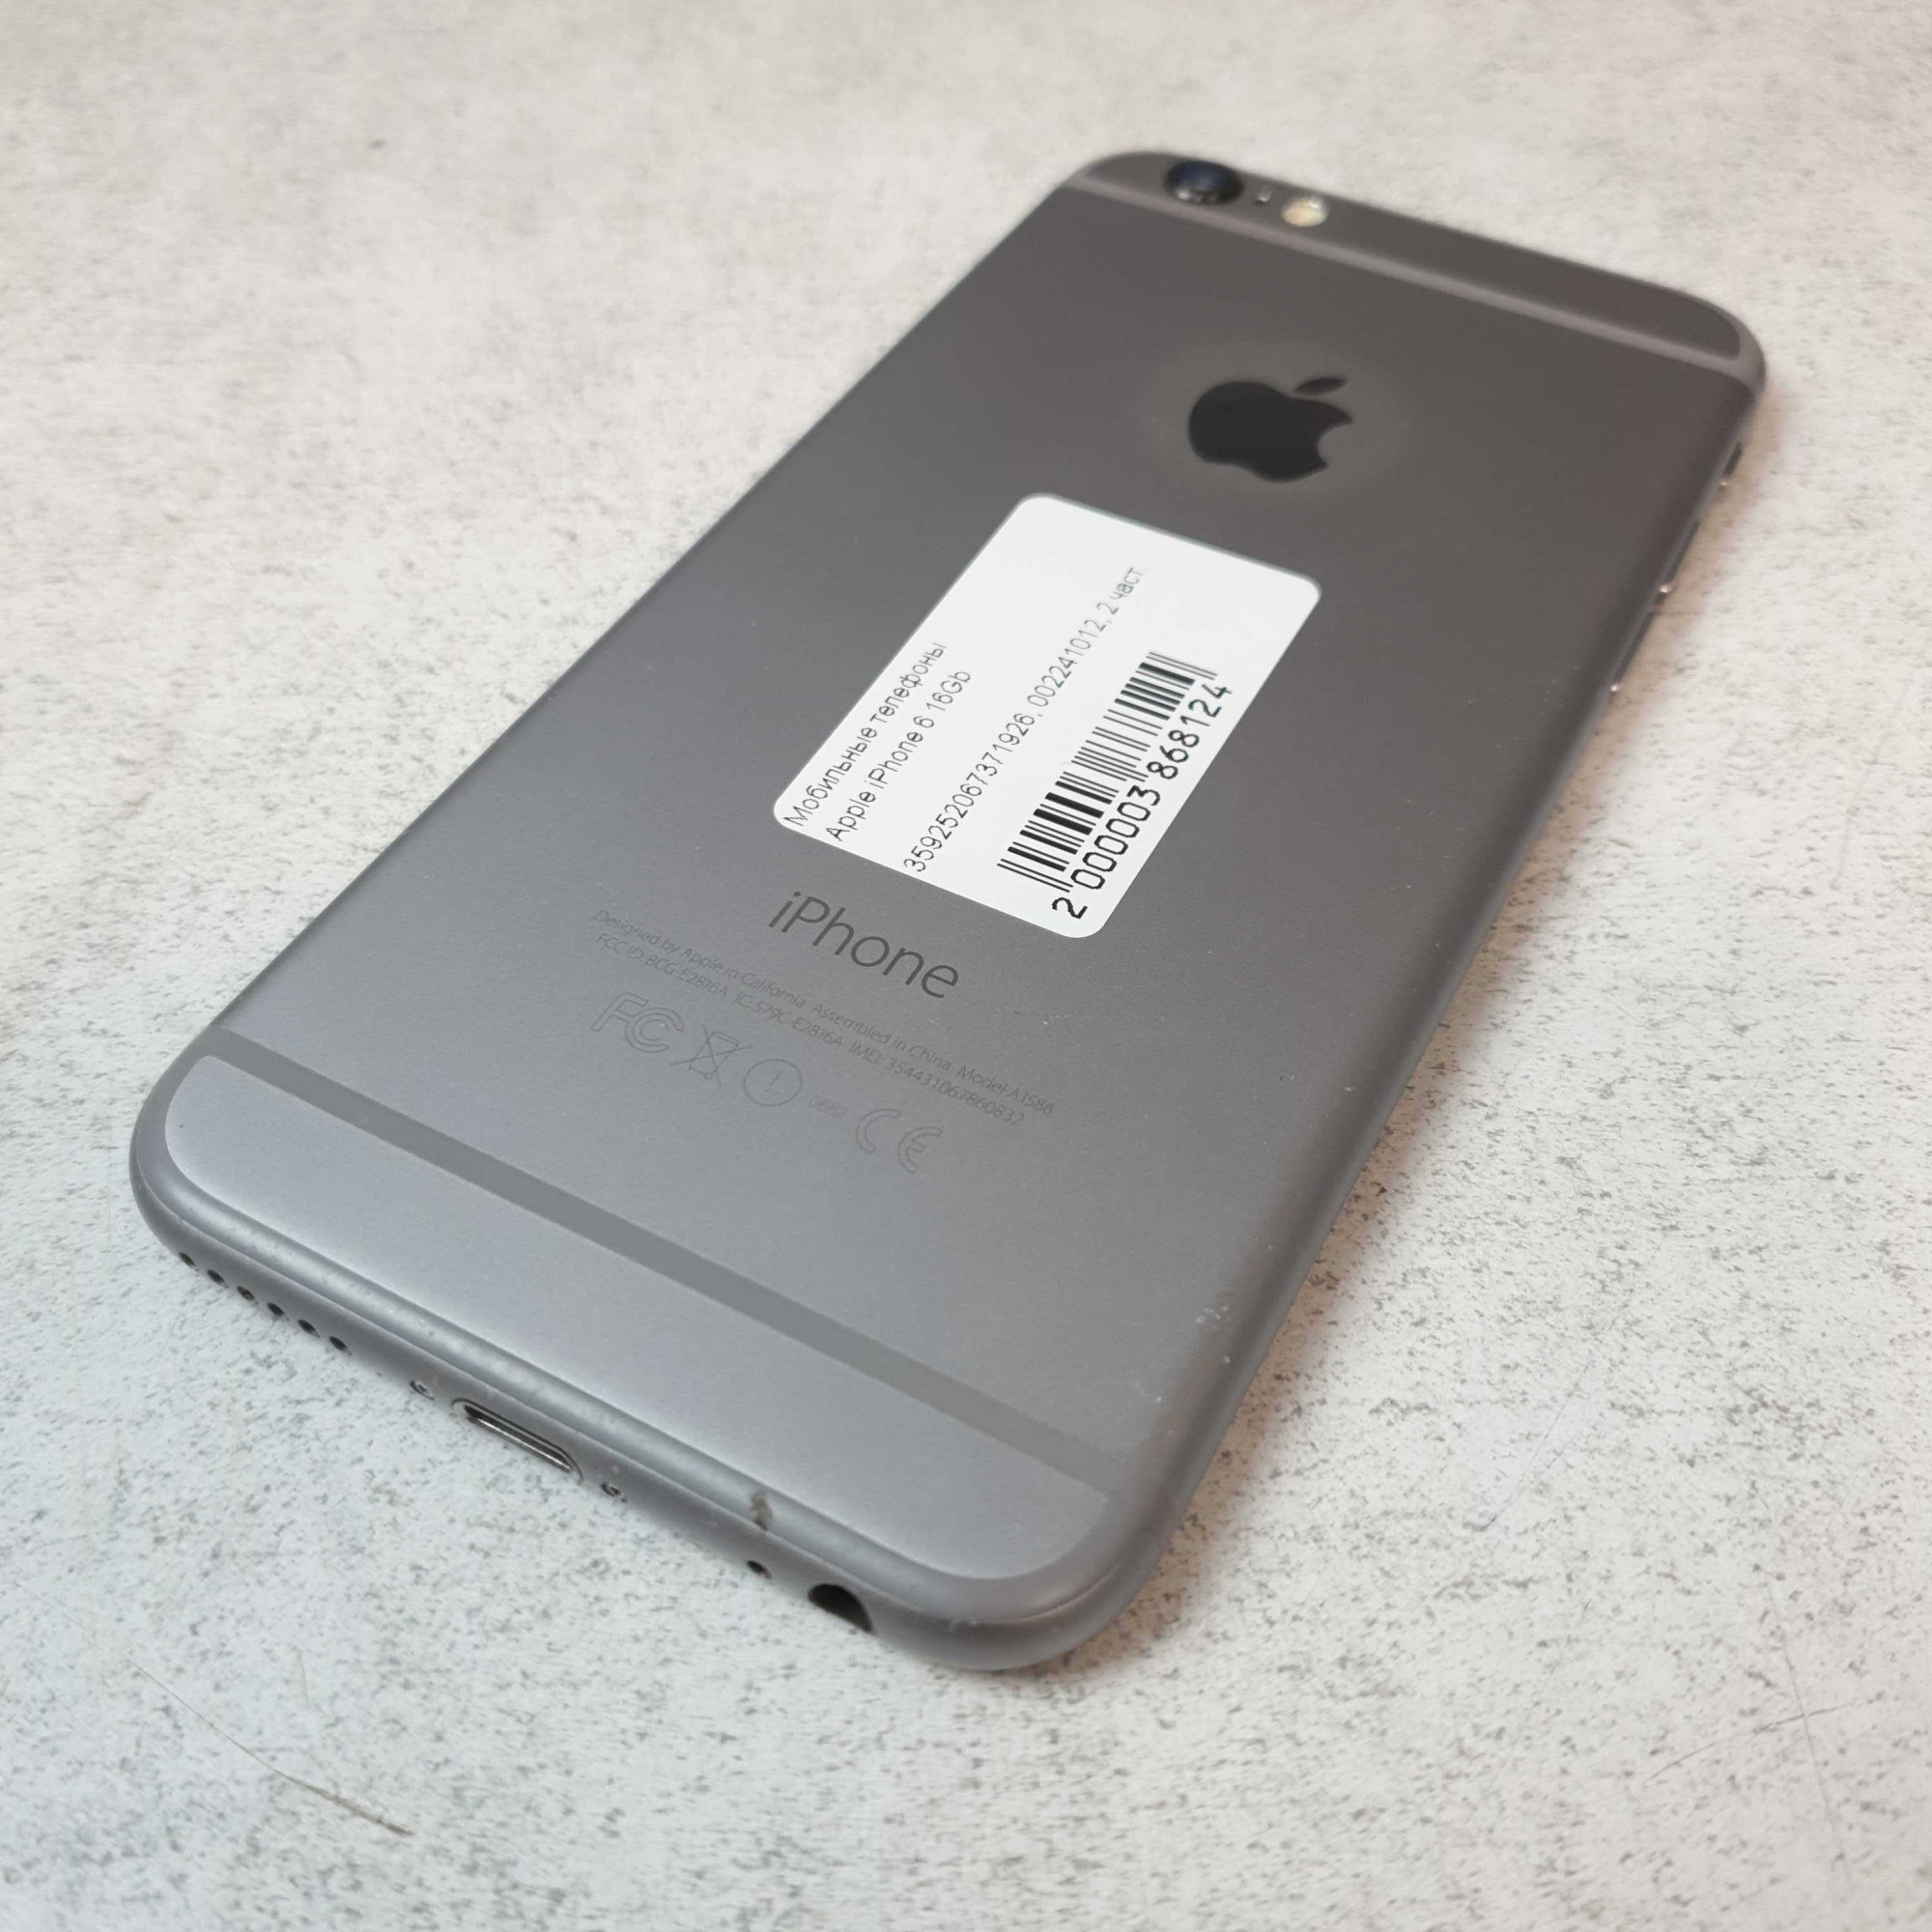 Apple iPhone 6 16Gb Space Gray  7